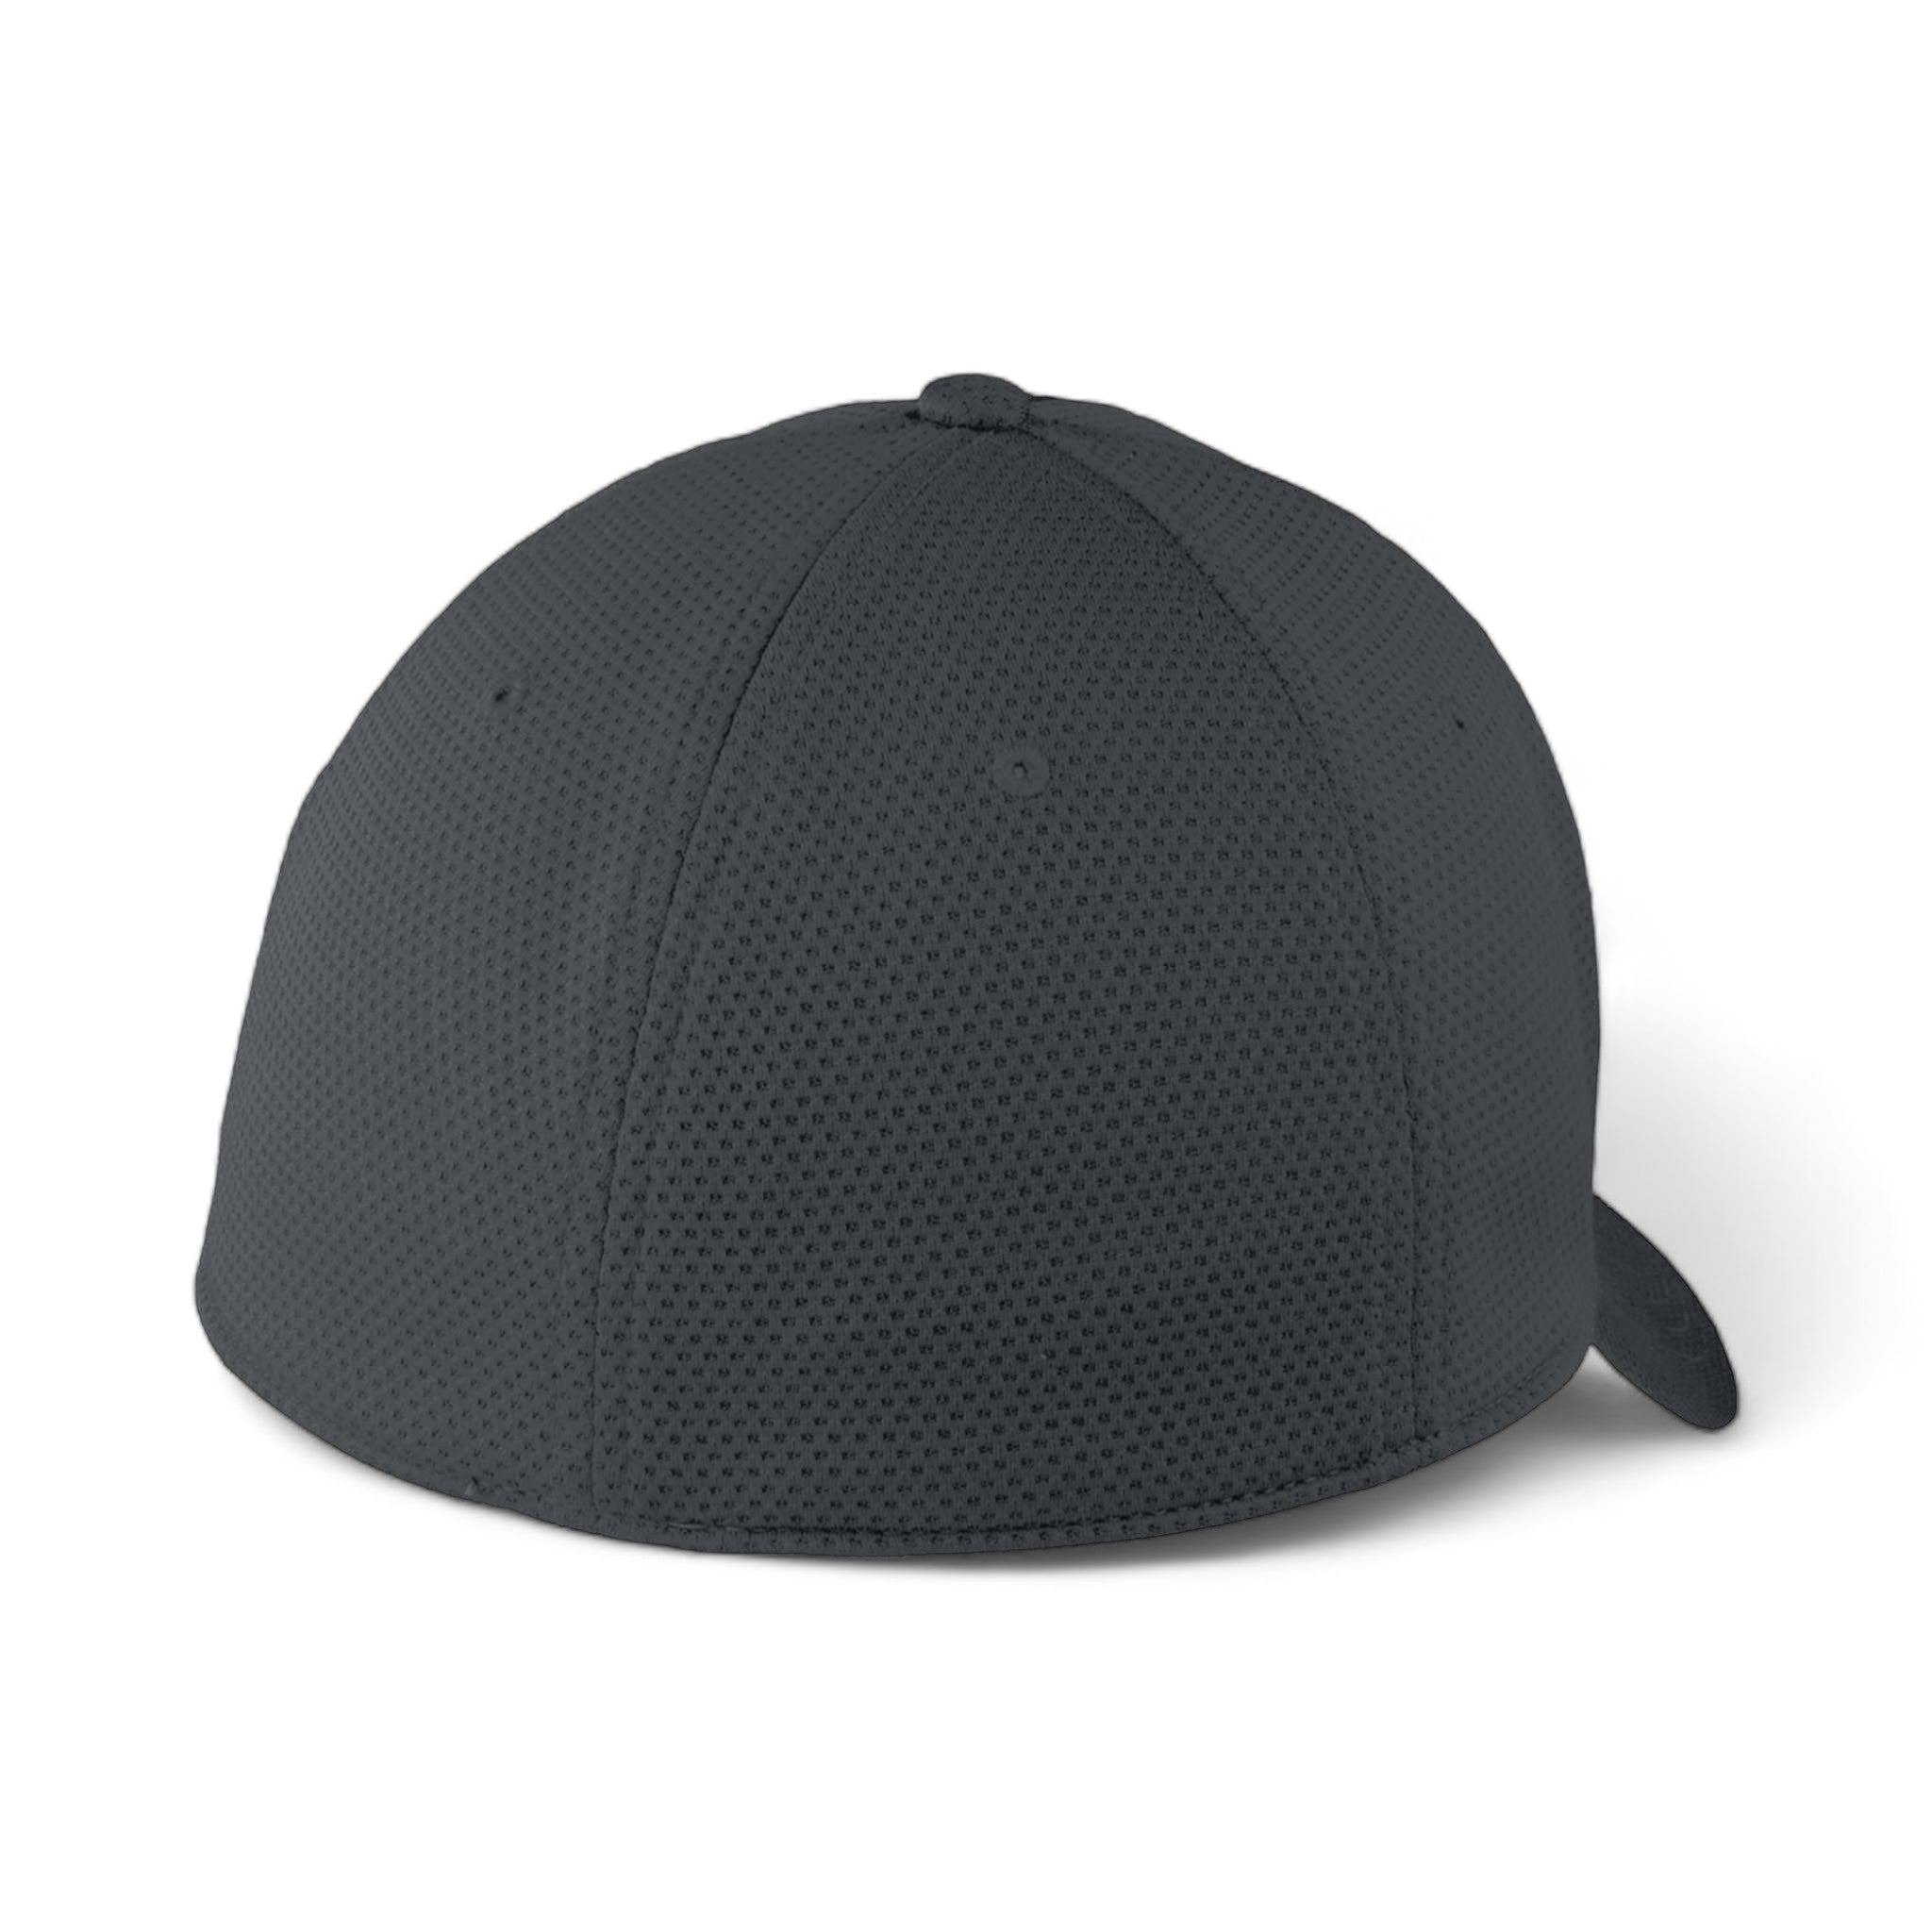 Back view of New Era NE1090 custom hat in charcoal